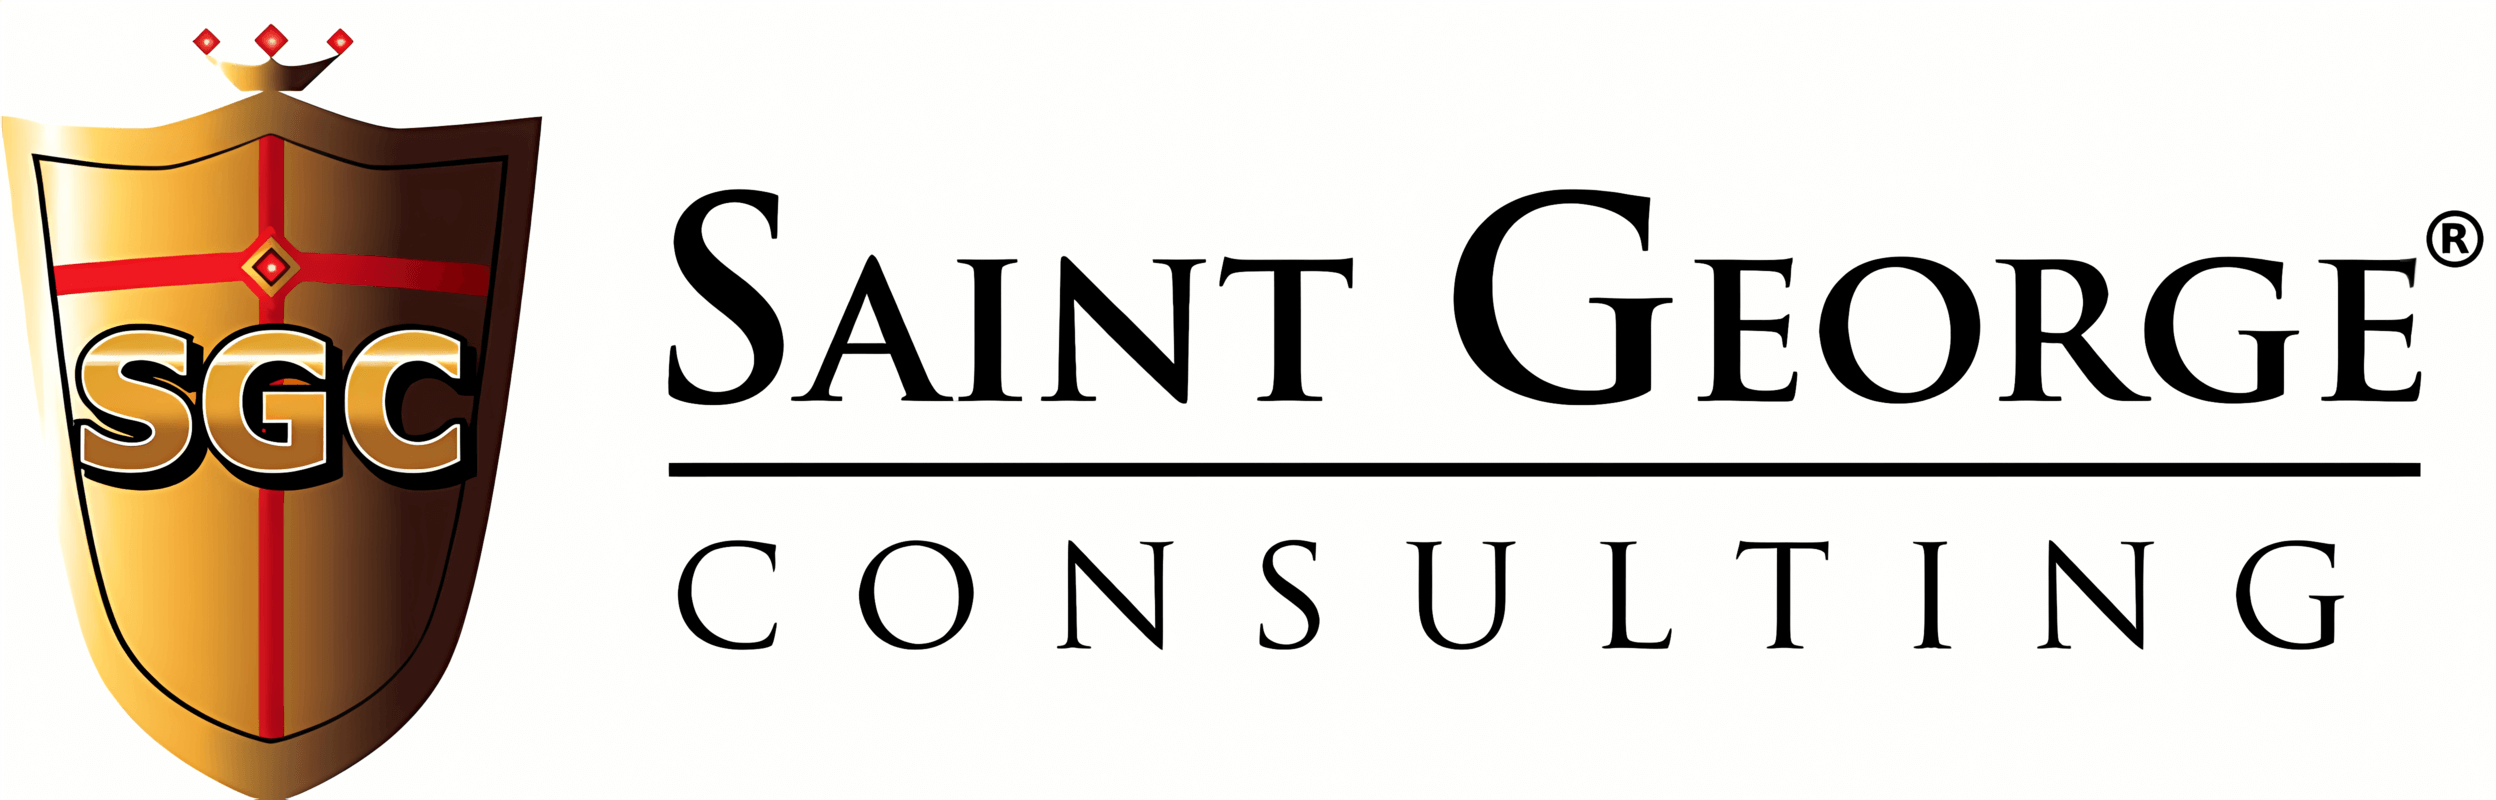 Saint George Consulting Logo